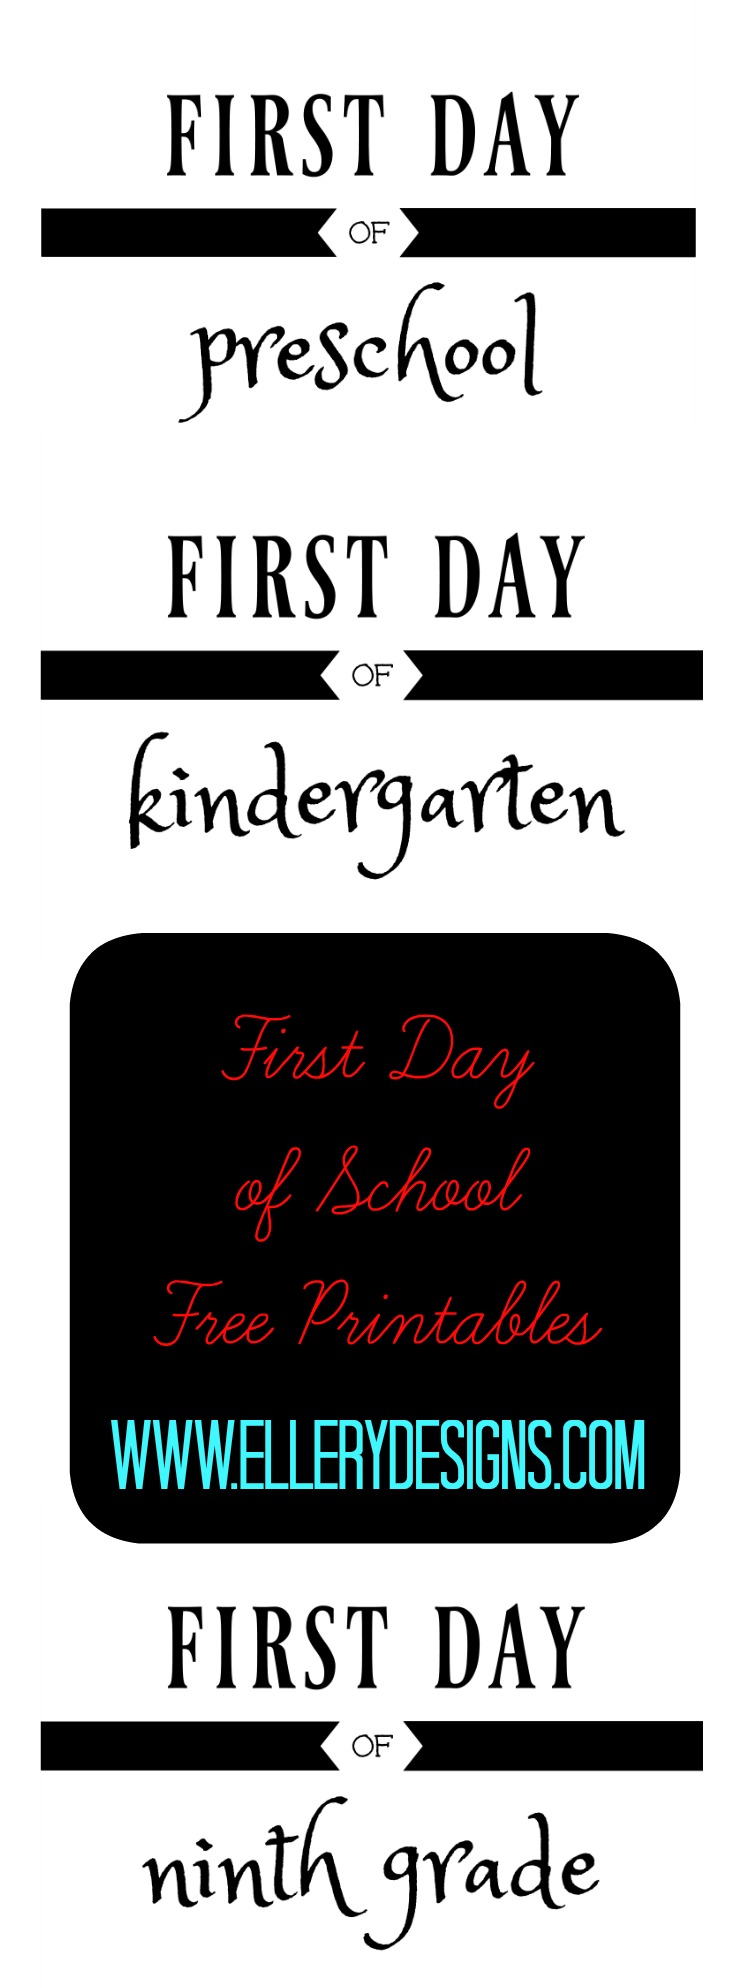 First Day of School Free Printables www.ellerydesigns.com